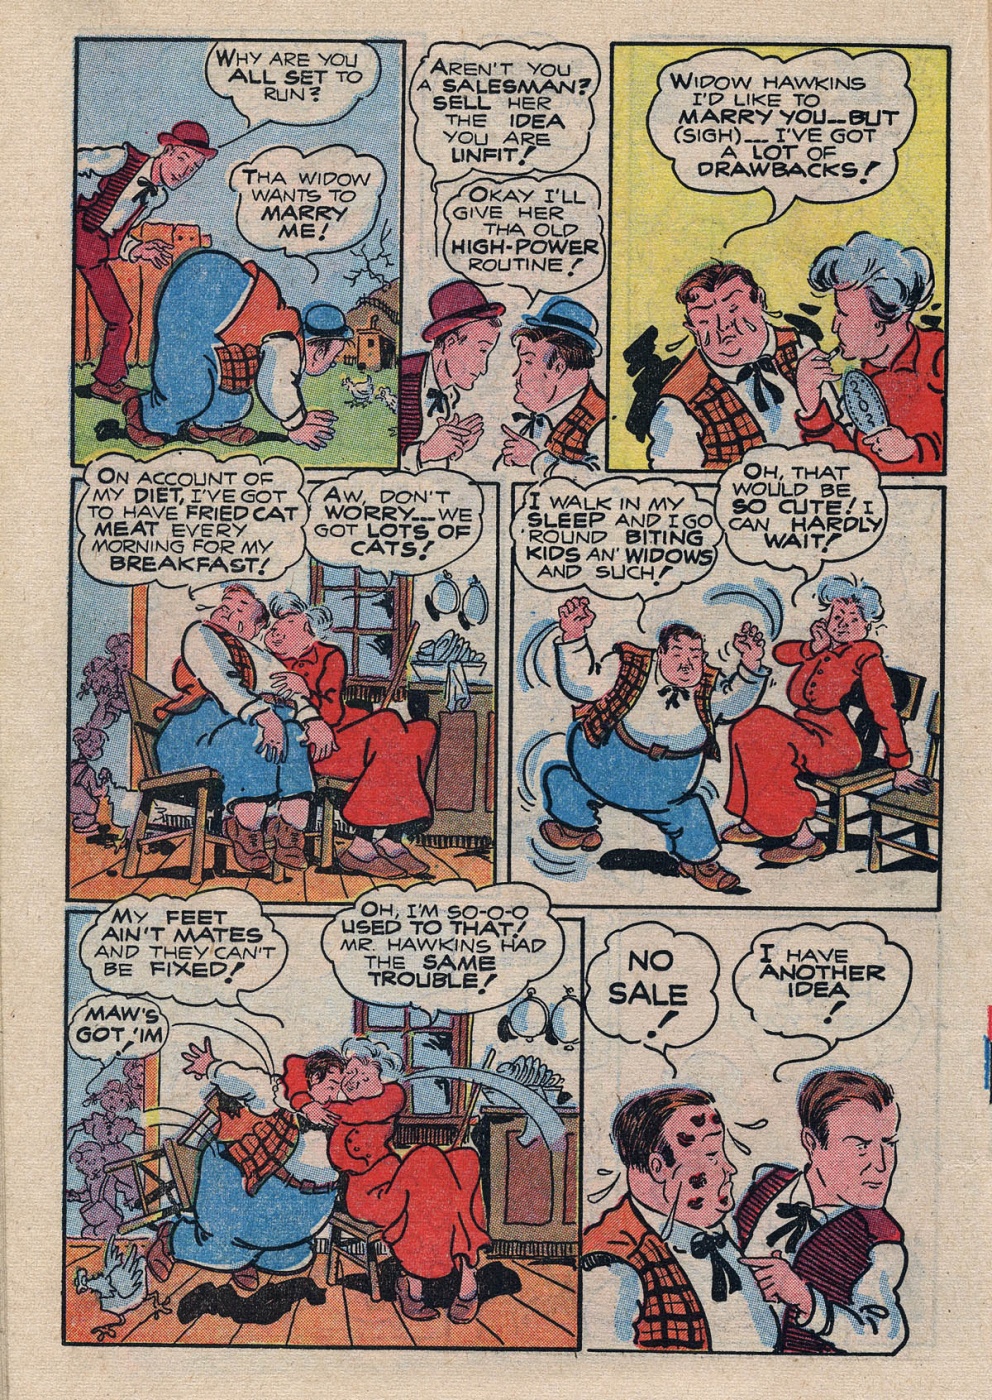 Funny Comic Strips - Abbott and Costello 001 (Feb 1948) 20